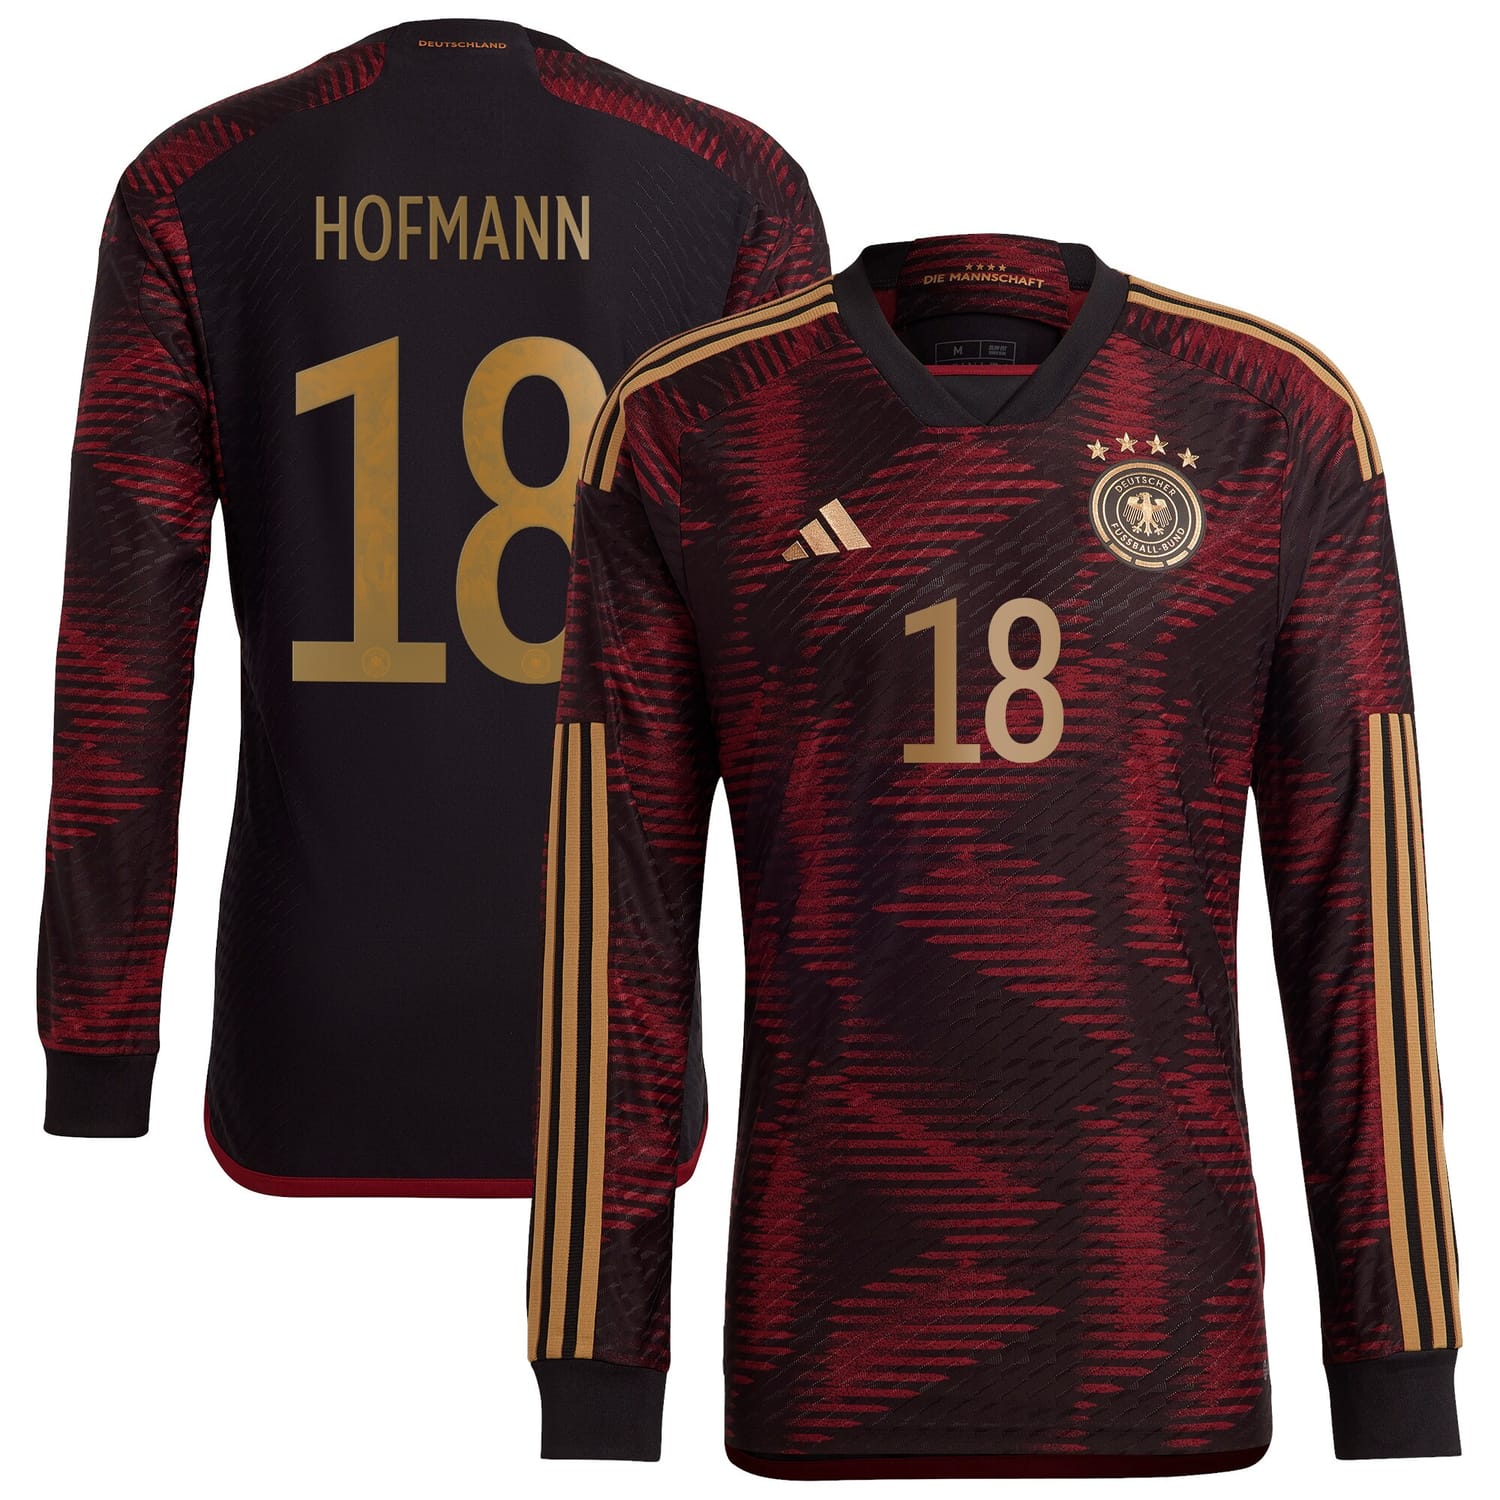 Germany National Team Away Authentic Jersey Shirt Long Sleeve player Jonas Hofmann 18 printing for Men